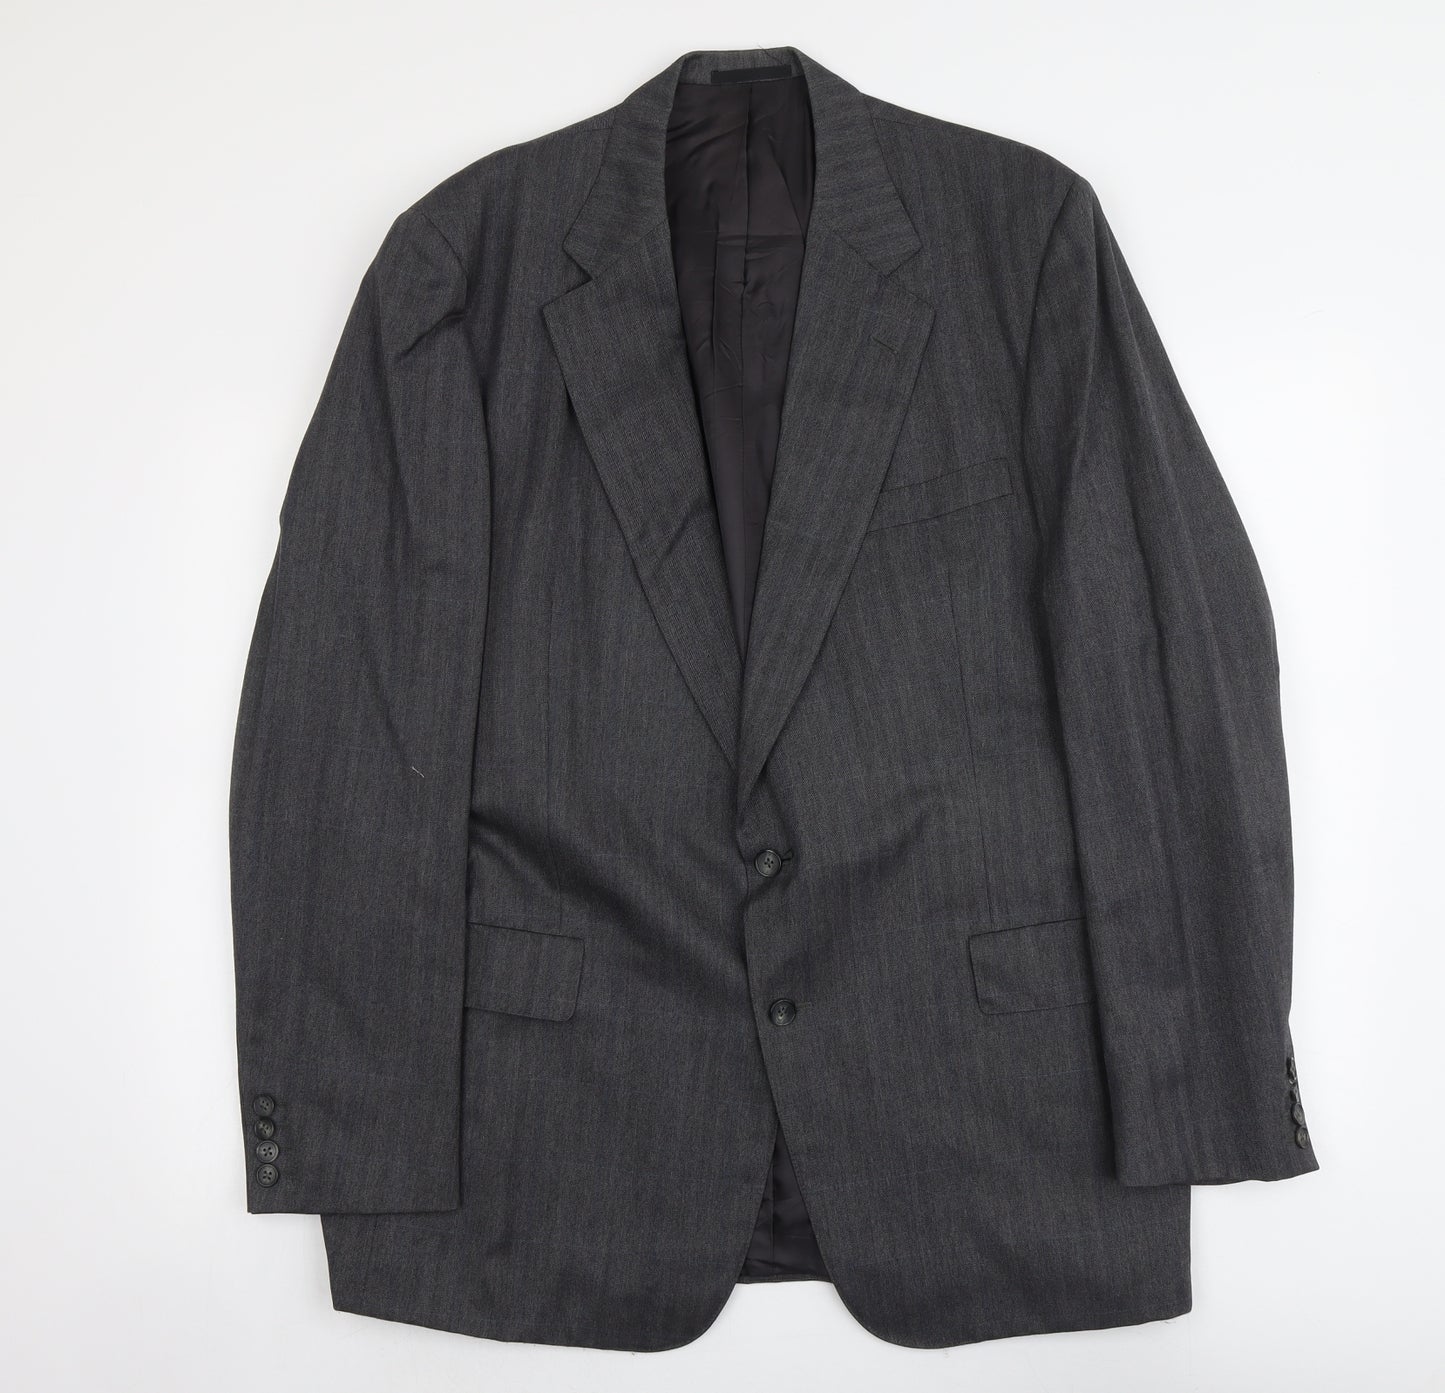 Austin Reed Mens Grey Wool Jacket Suit Jacket Size 44 Regular